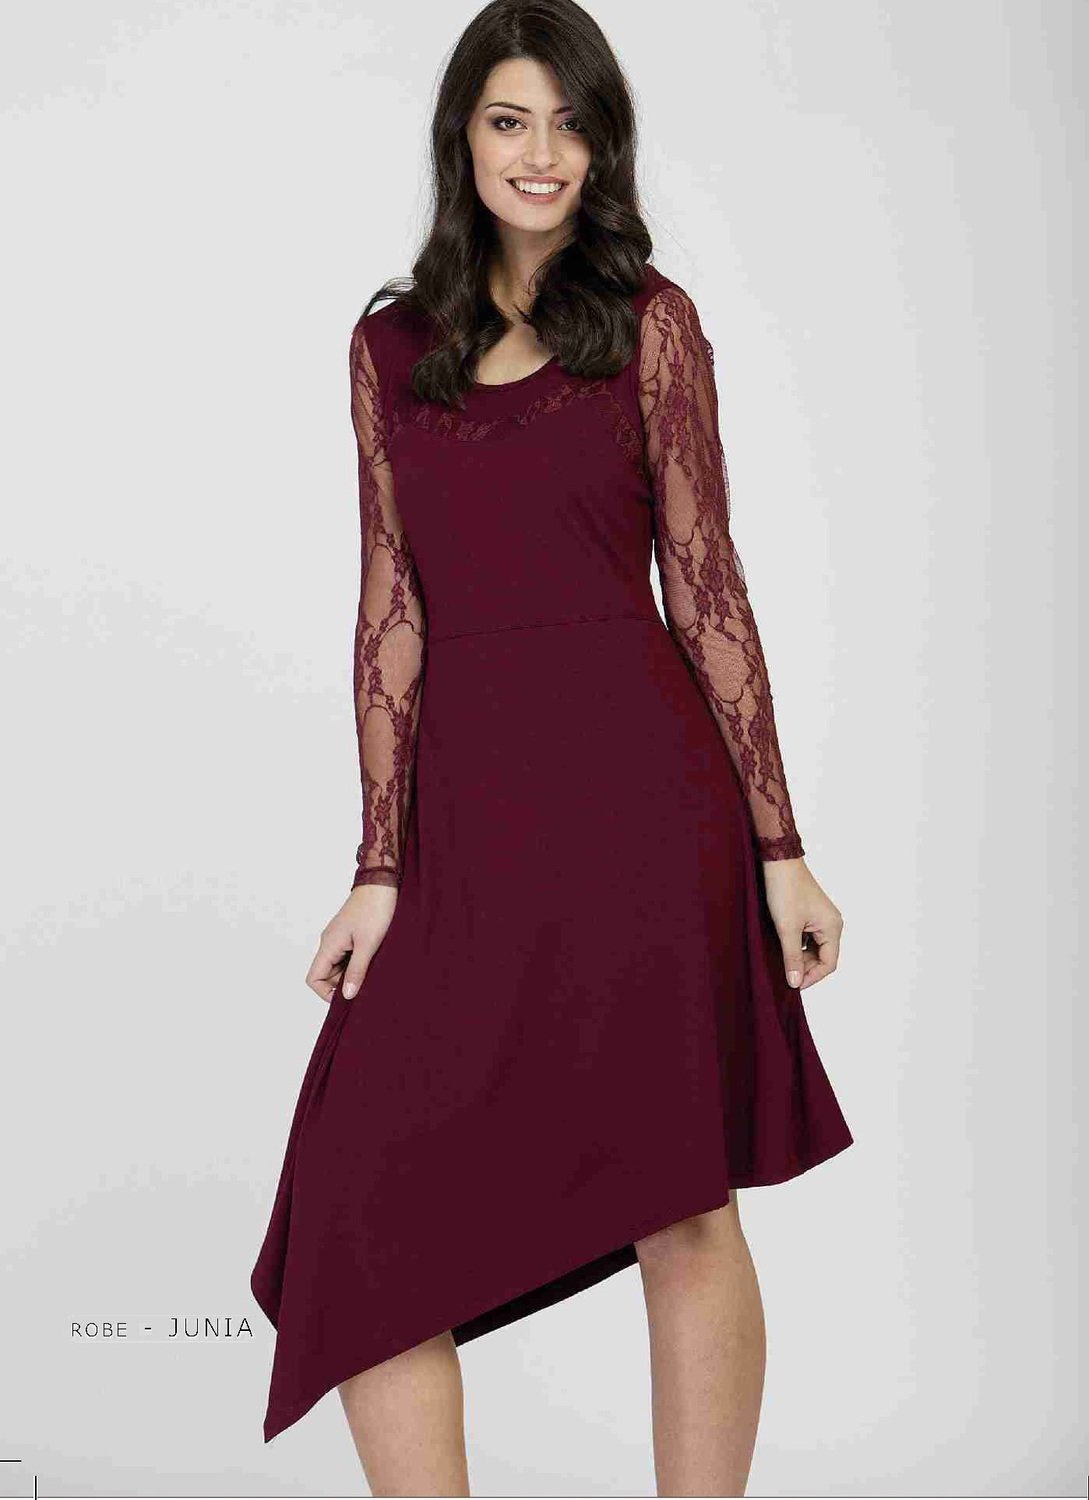 Maloka: Asymmetrical Cherry Lace Dress (Only Wine, Black & Titanium Left!)